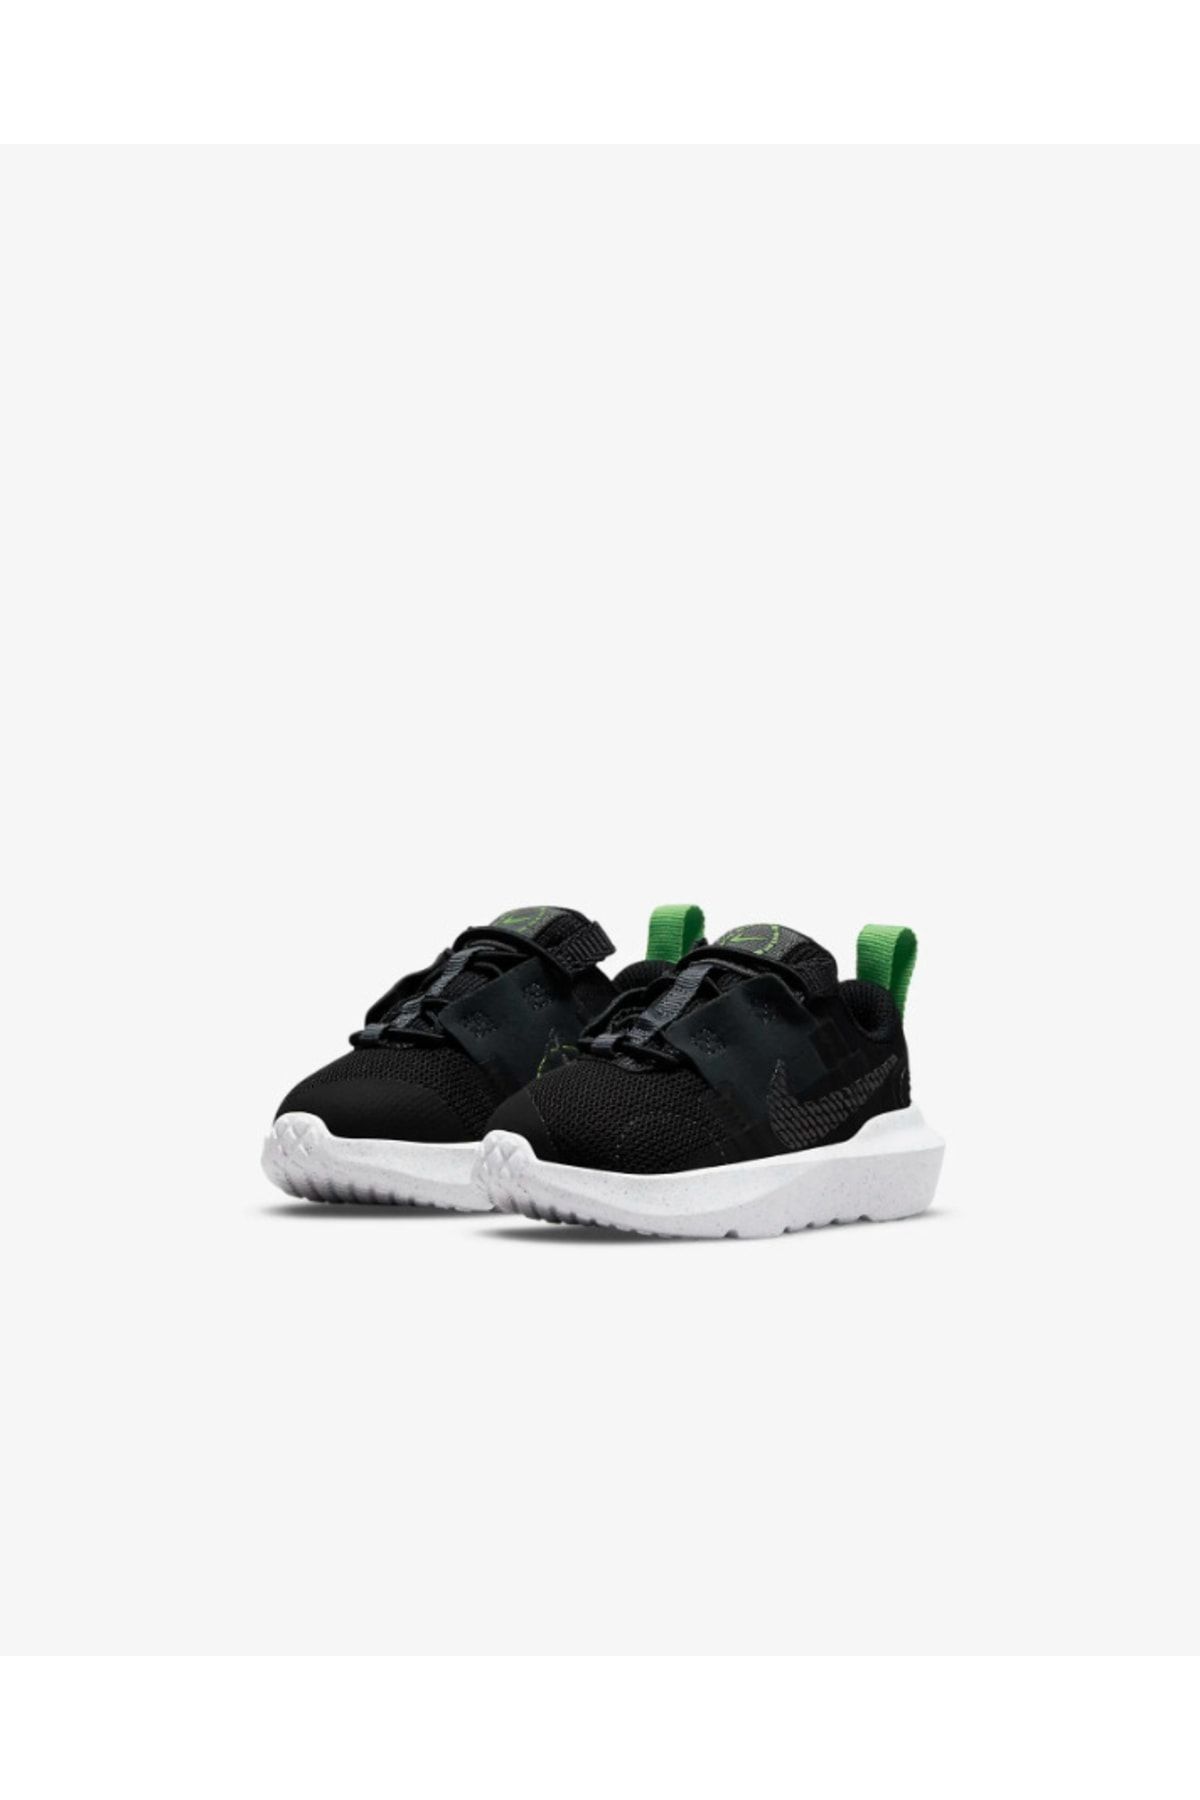 Nike Crater Impact Çocuk Ayakkabısı